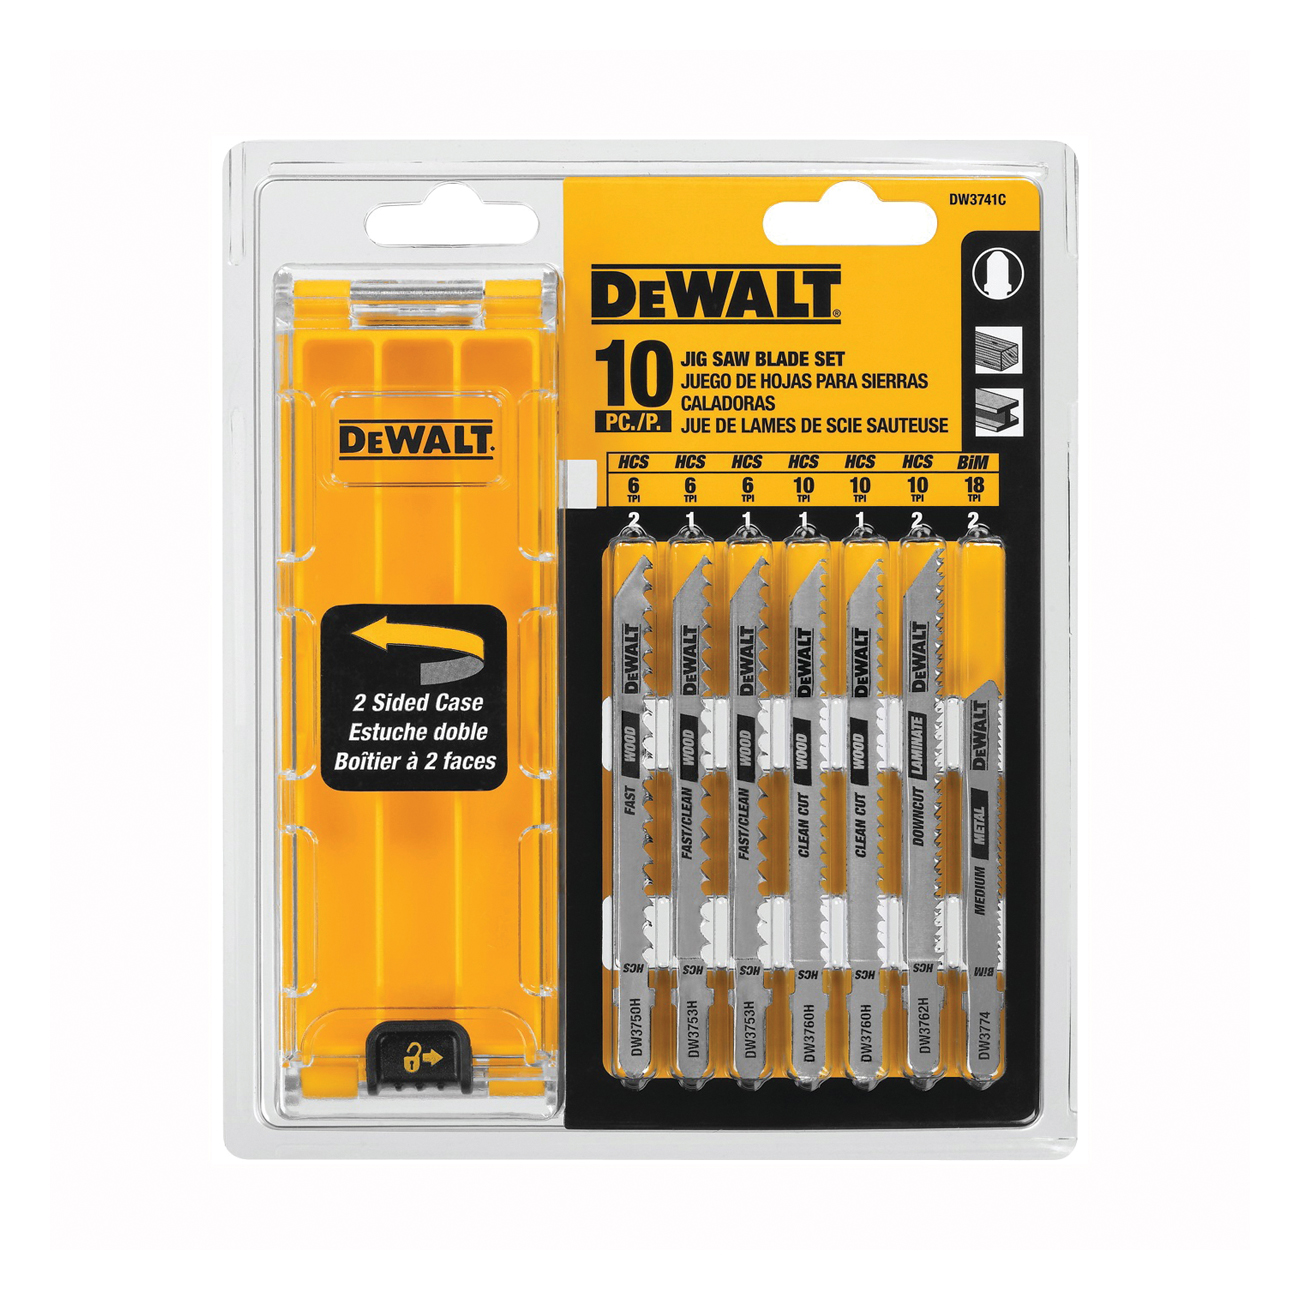 DeWalt DW3741C